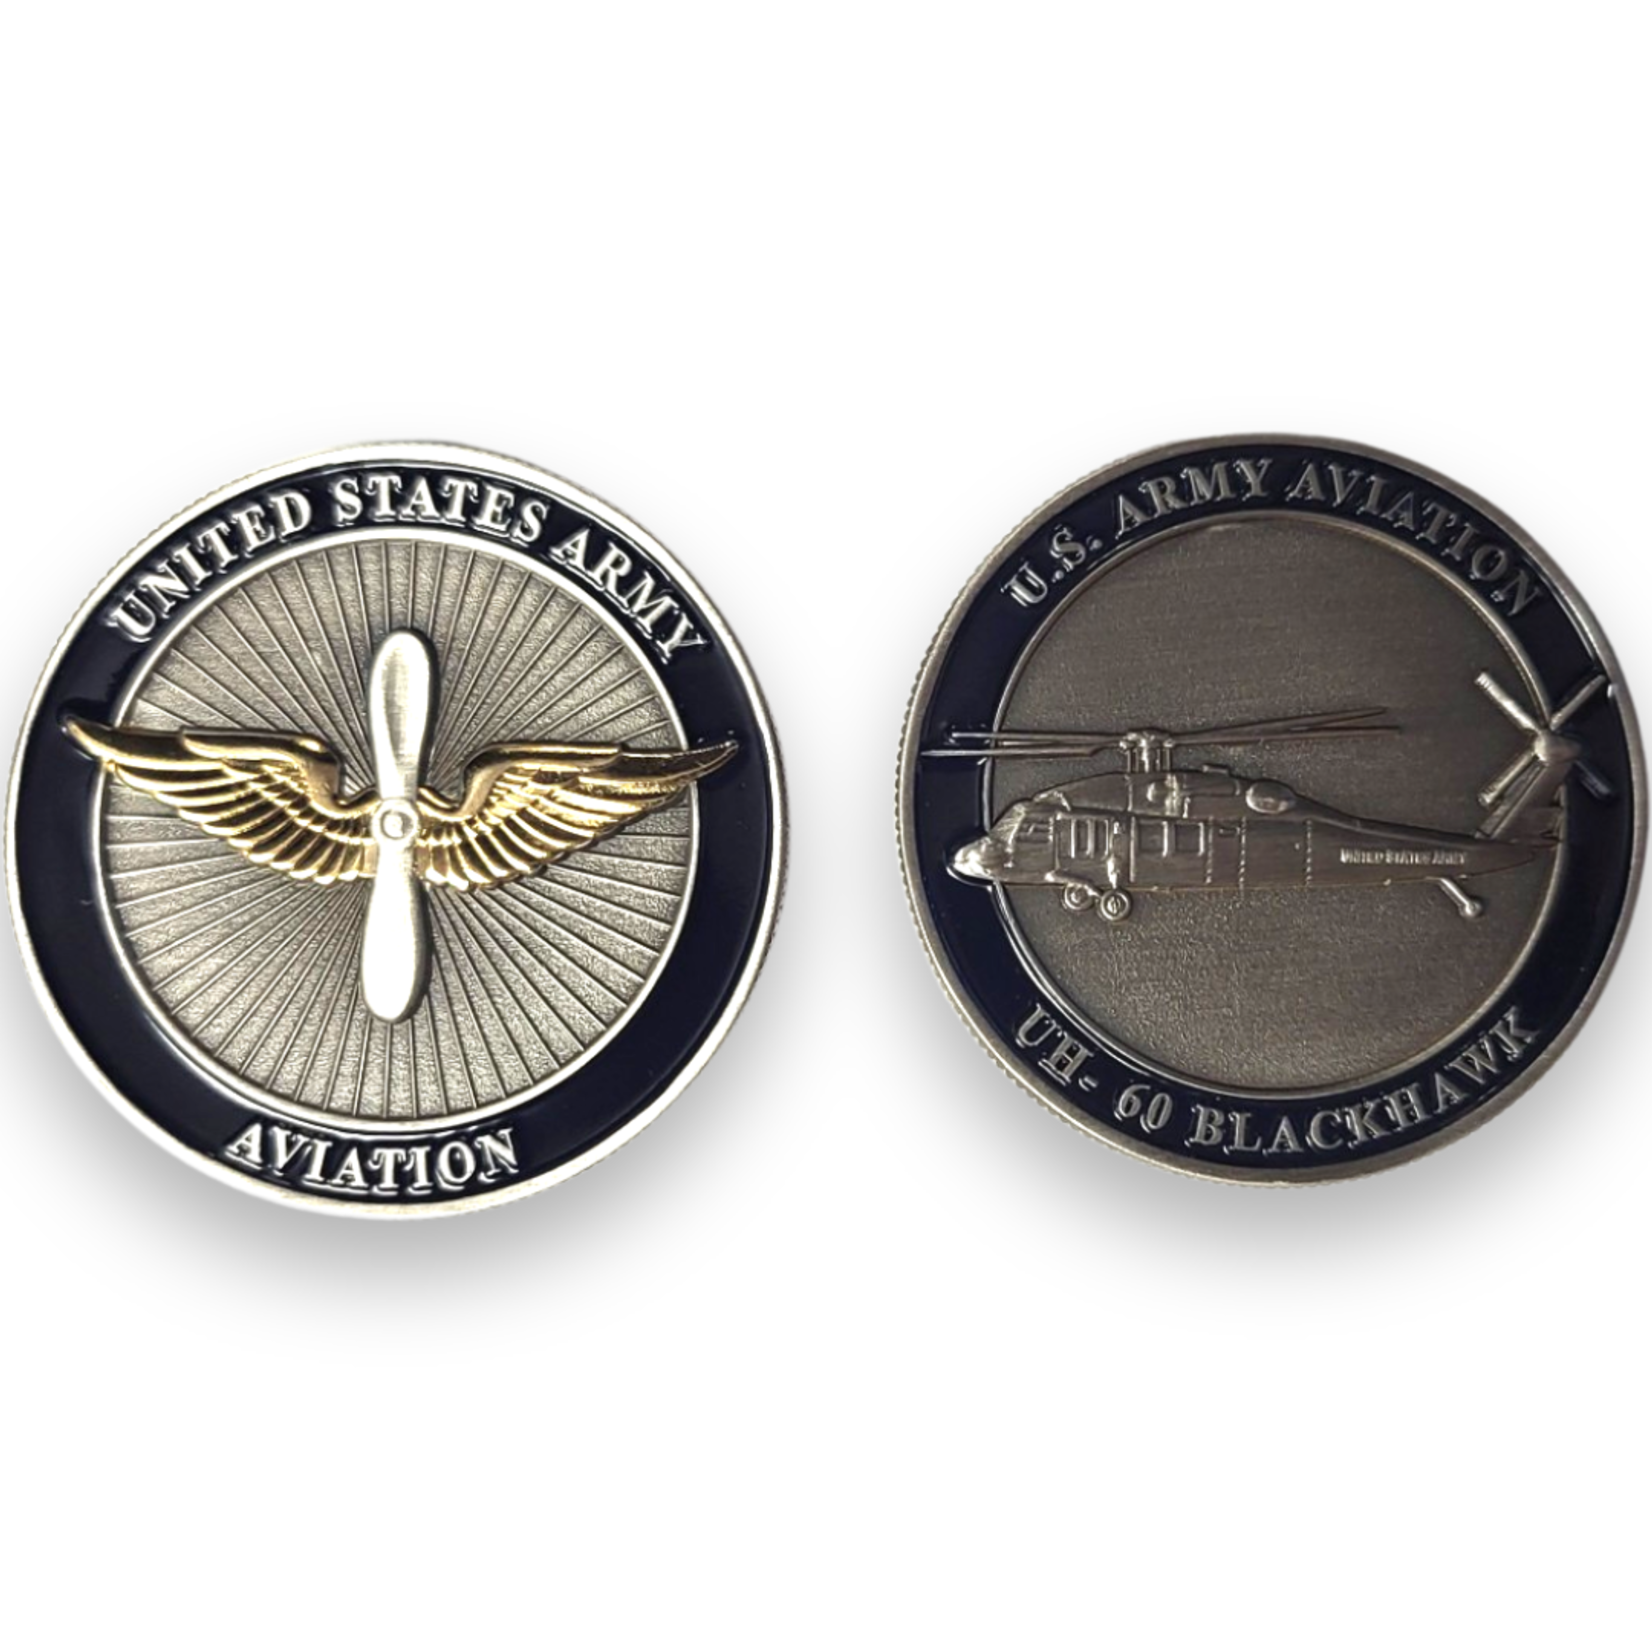 Blackhawk Aviation Coin